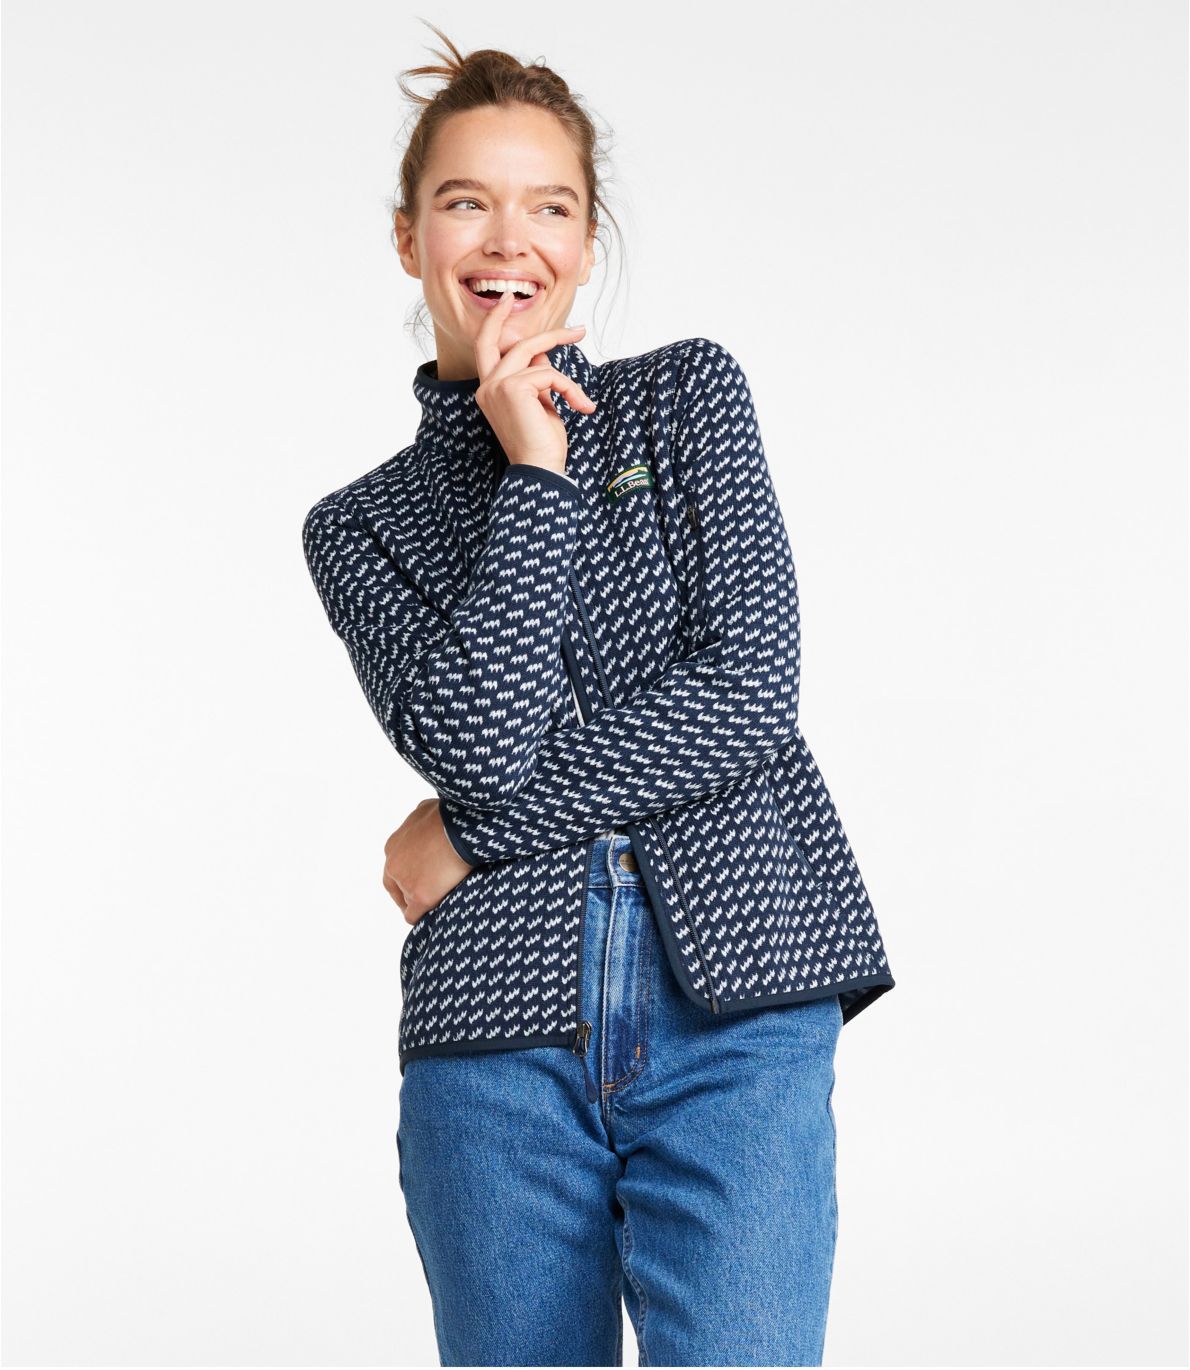 Women's L.L.Bean Sweater Fleece Full-Zip Jacket, Print